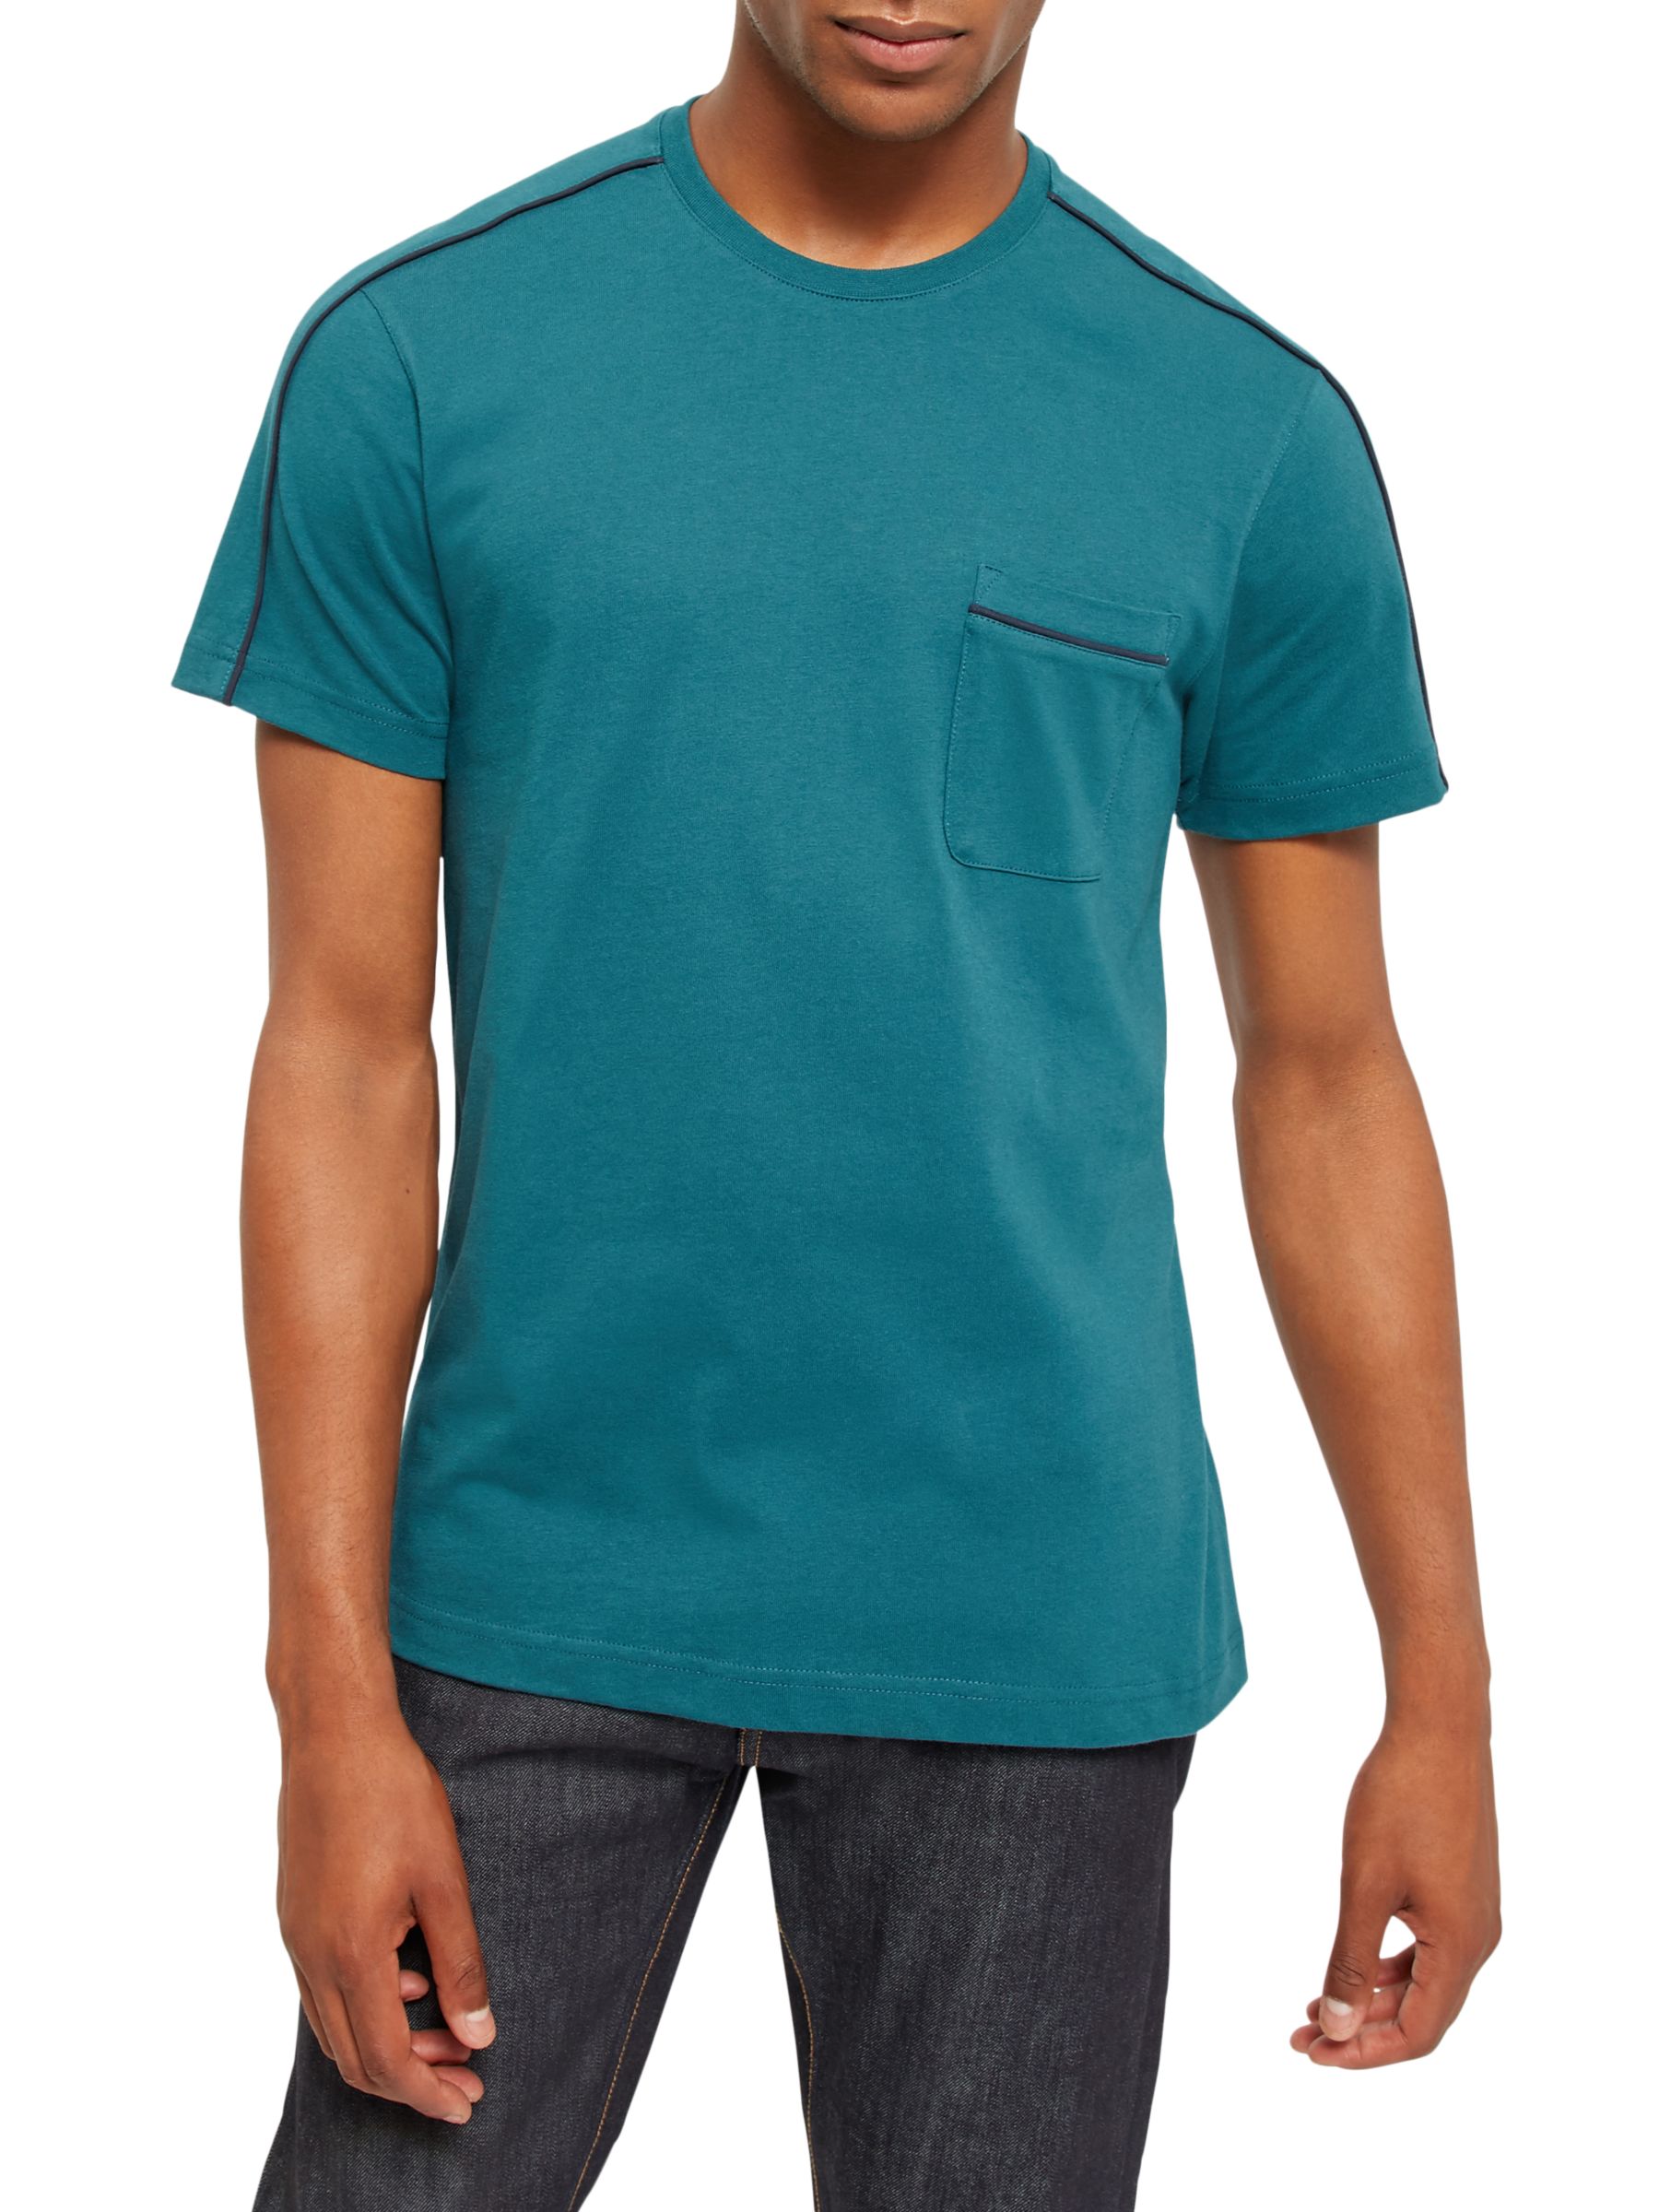 Jaeger Pipe T-Shirt, Green, L